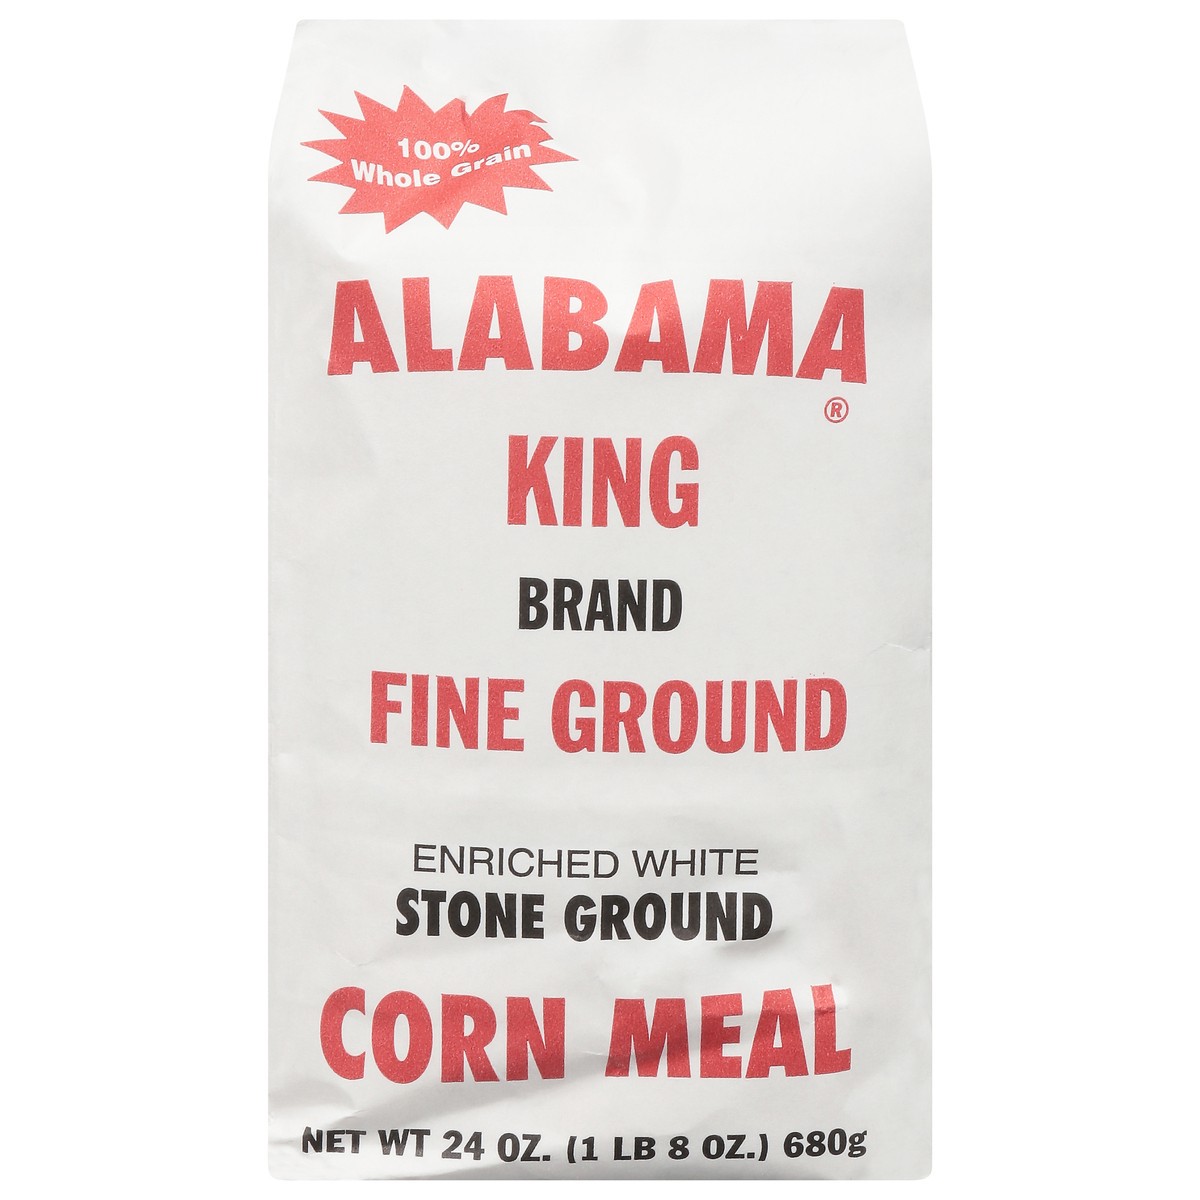 slide 1 of 5, Alabama Stone Ground Enriched White Fine Ground Corn Meal 24 oz, 24 oz